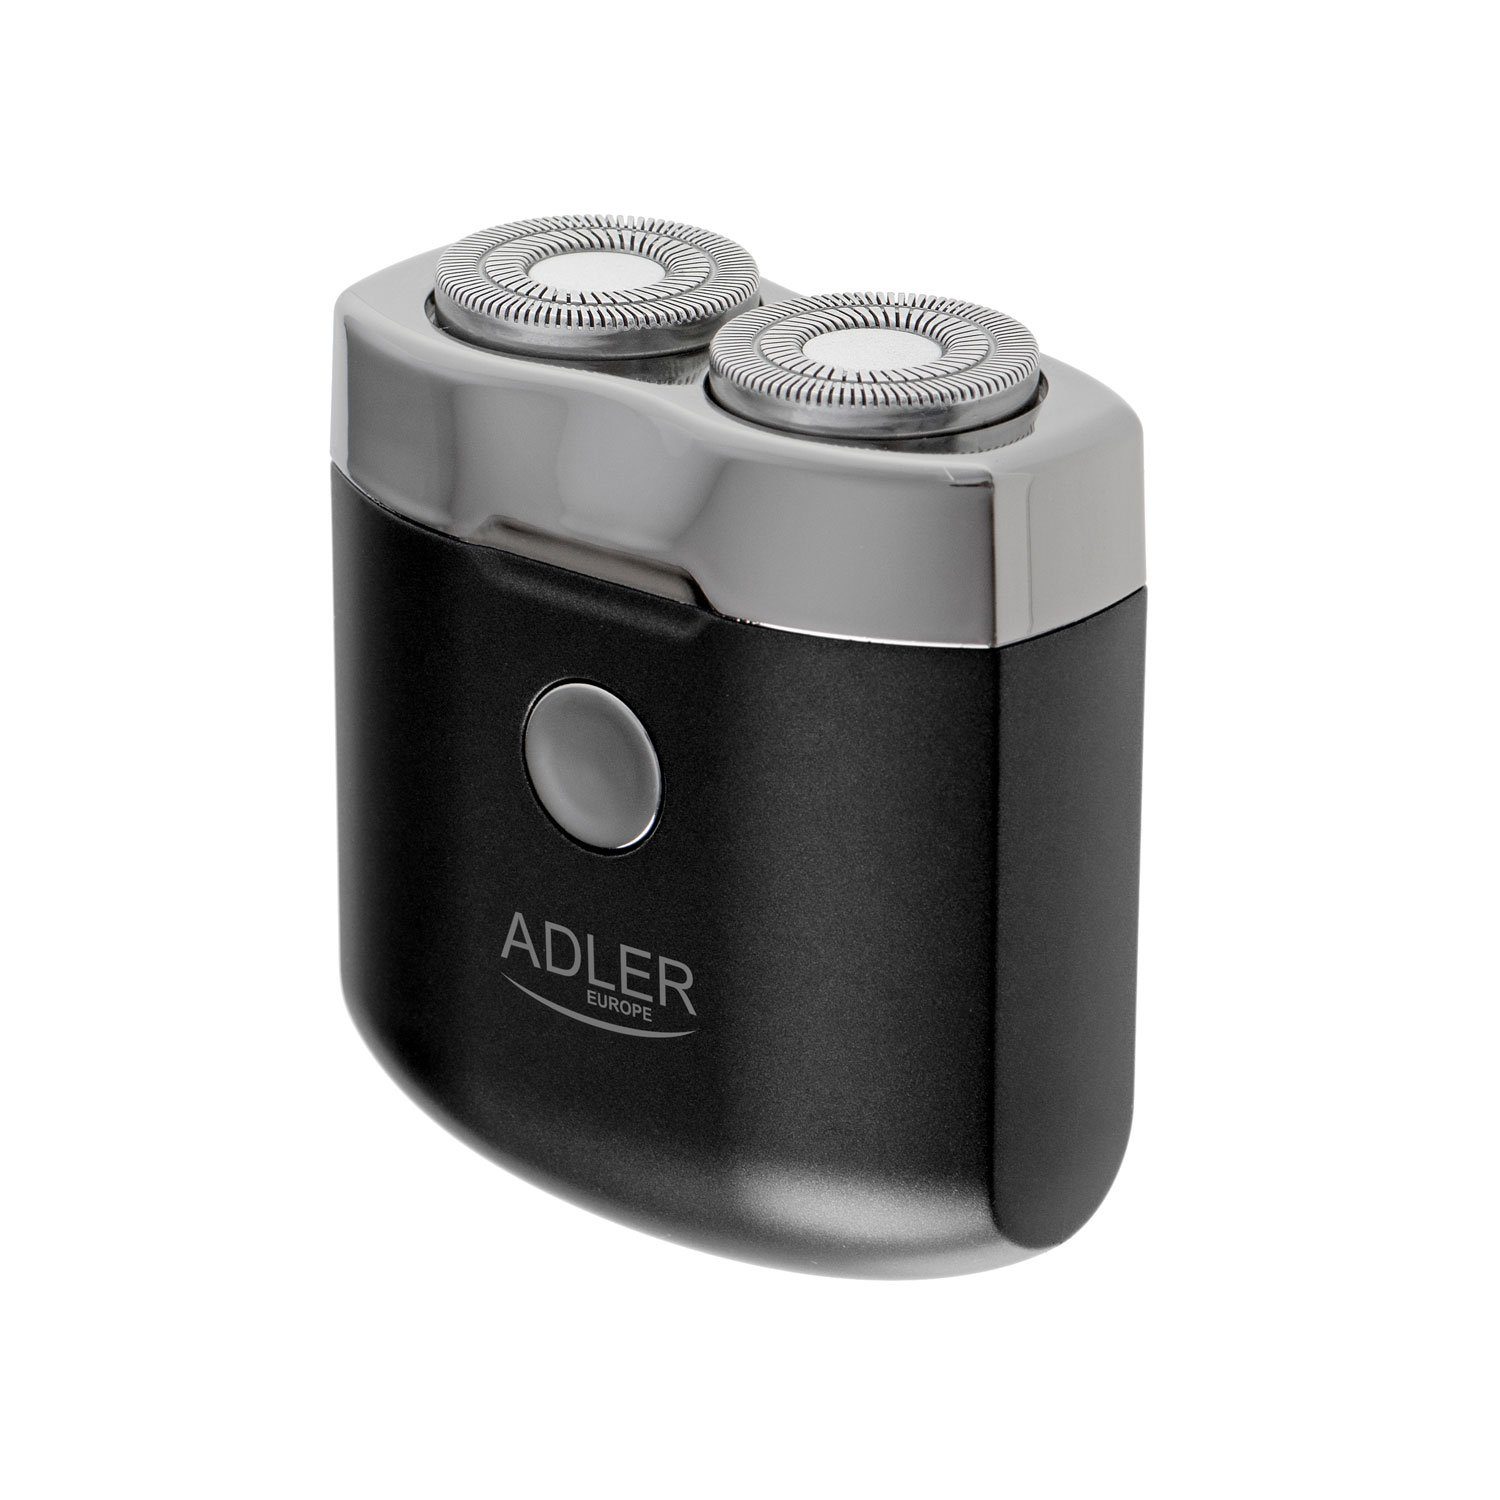 2936, mit USB Akku Netzkabel, USB-C-Aufladung Herrenrasierer Elektrorasierer Adler Reisen Reiserasierer Kabellos AD